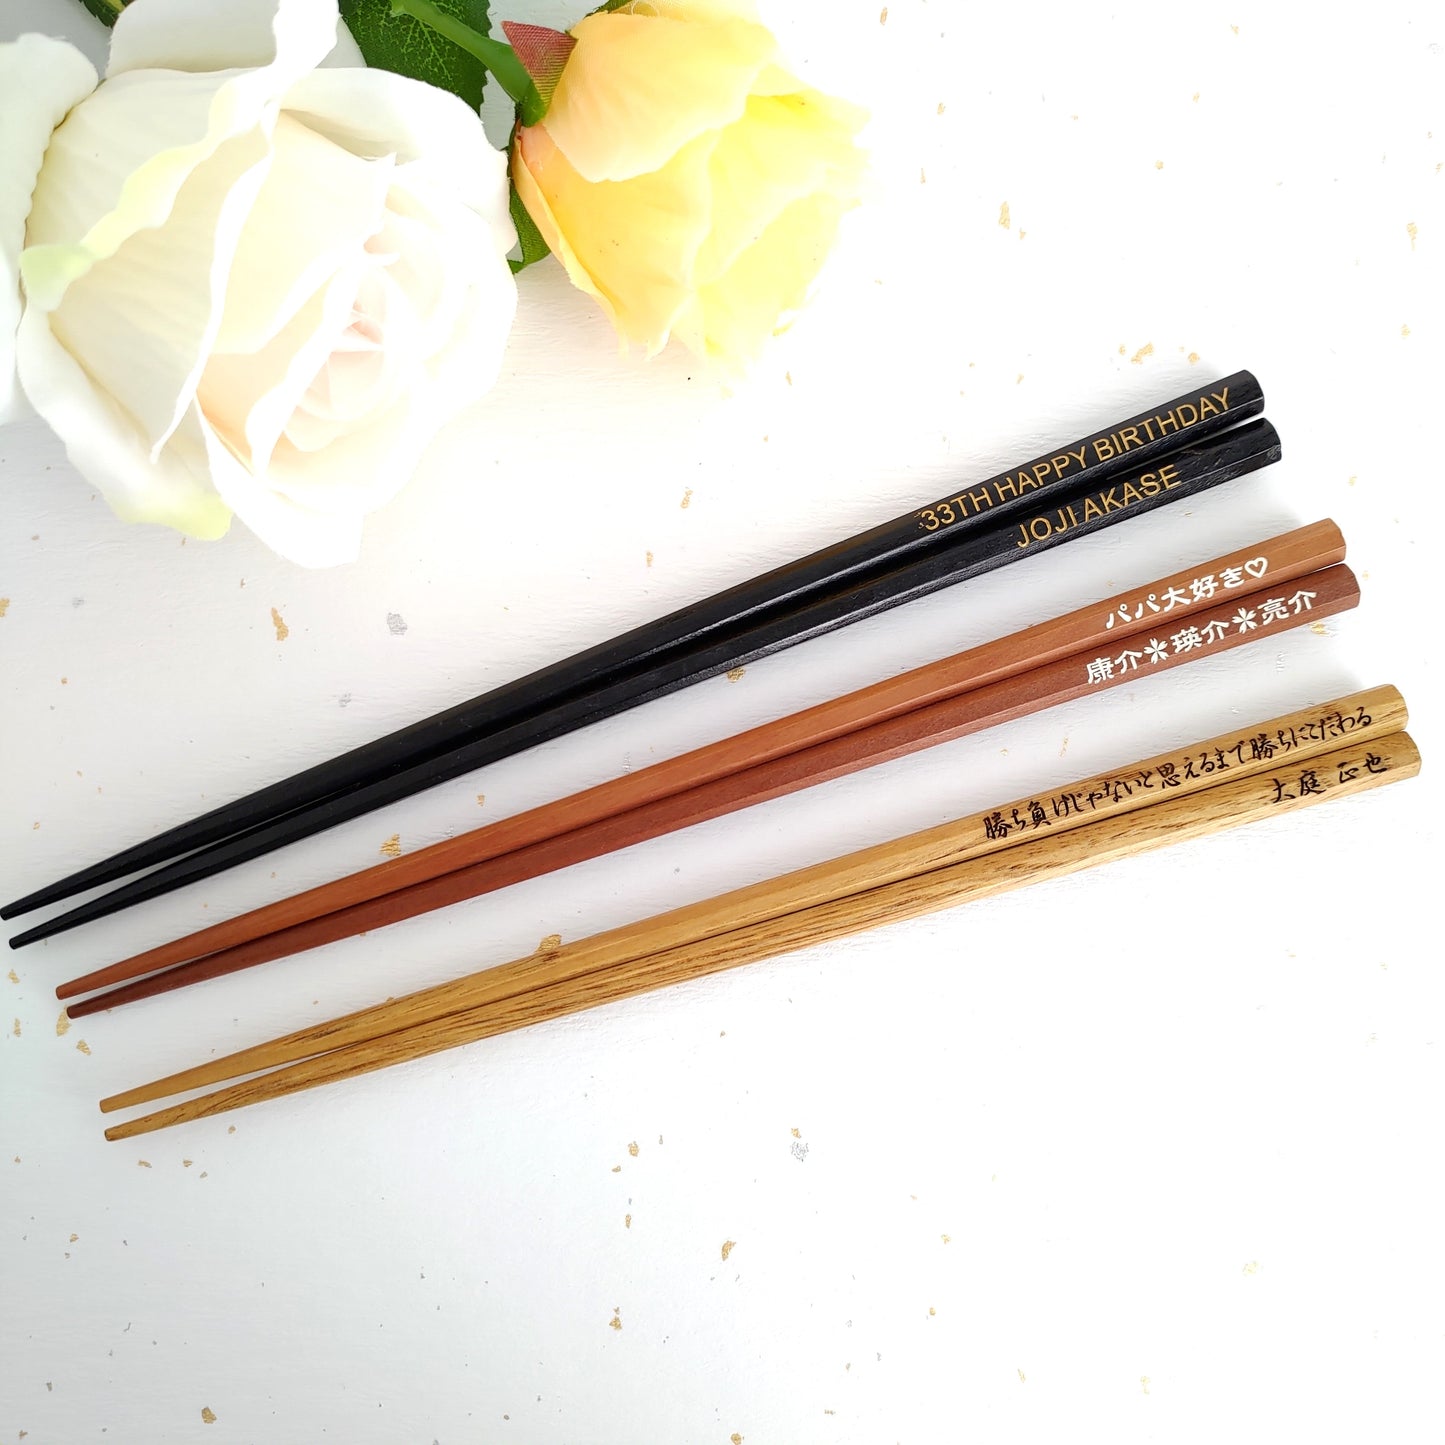 Octagonal Japanese chopsticks black brown natural - SINGLE PAIR